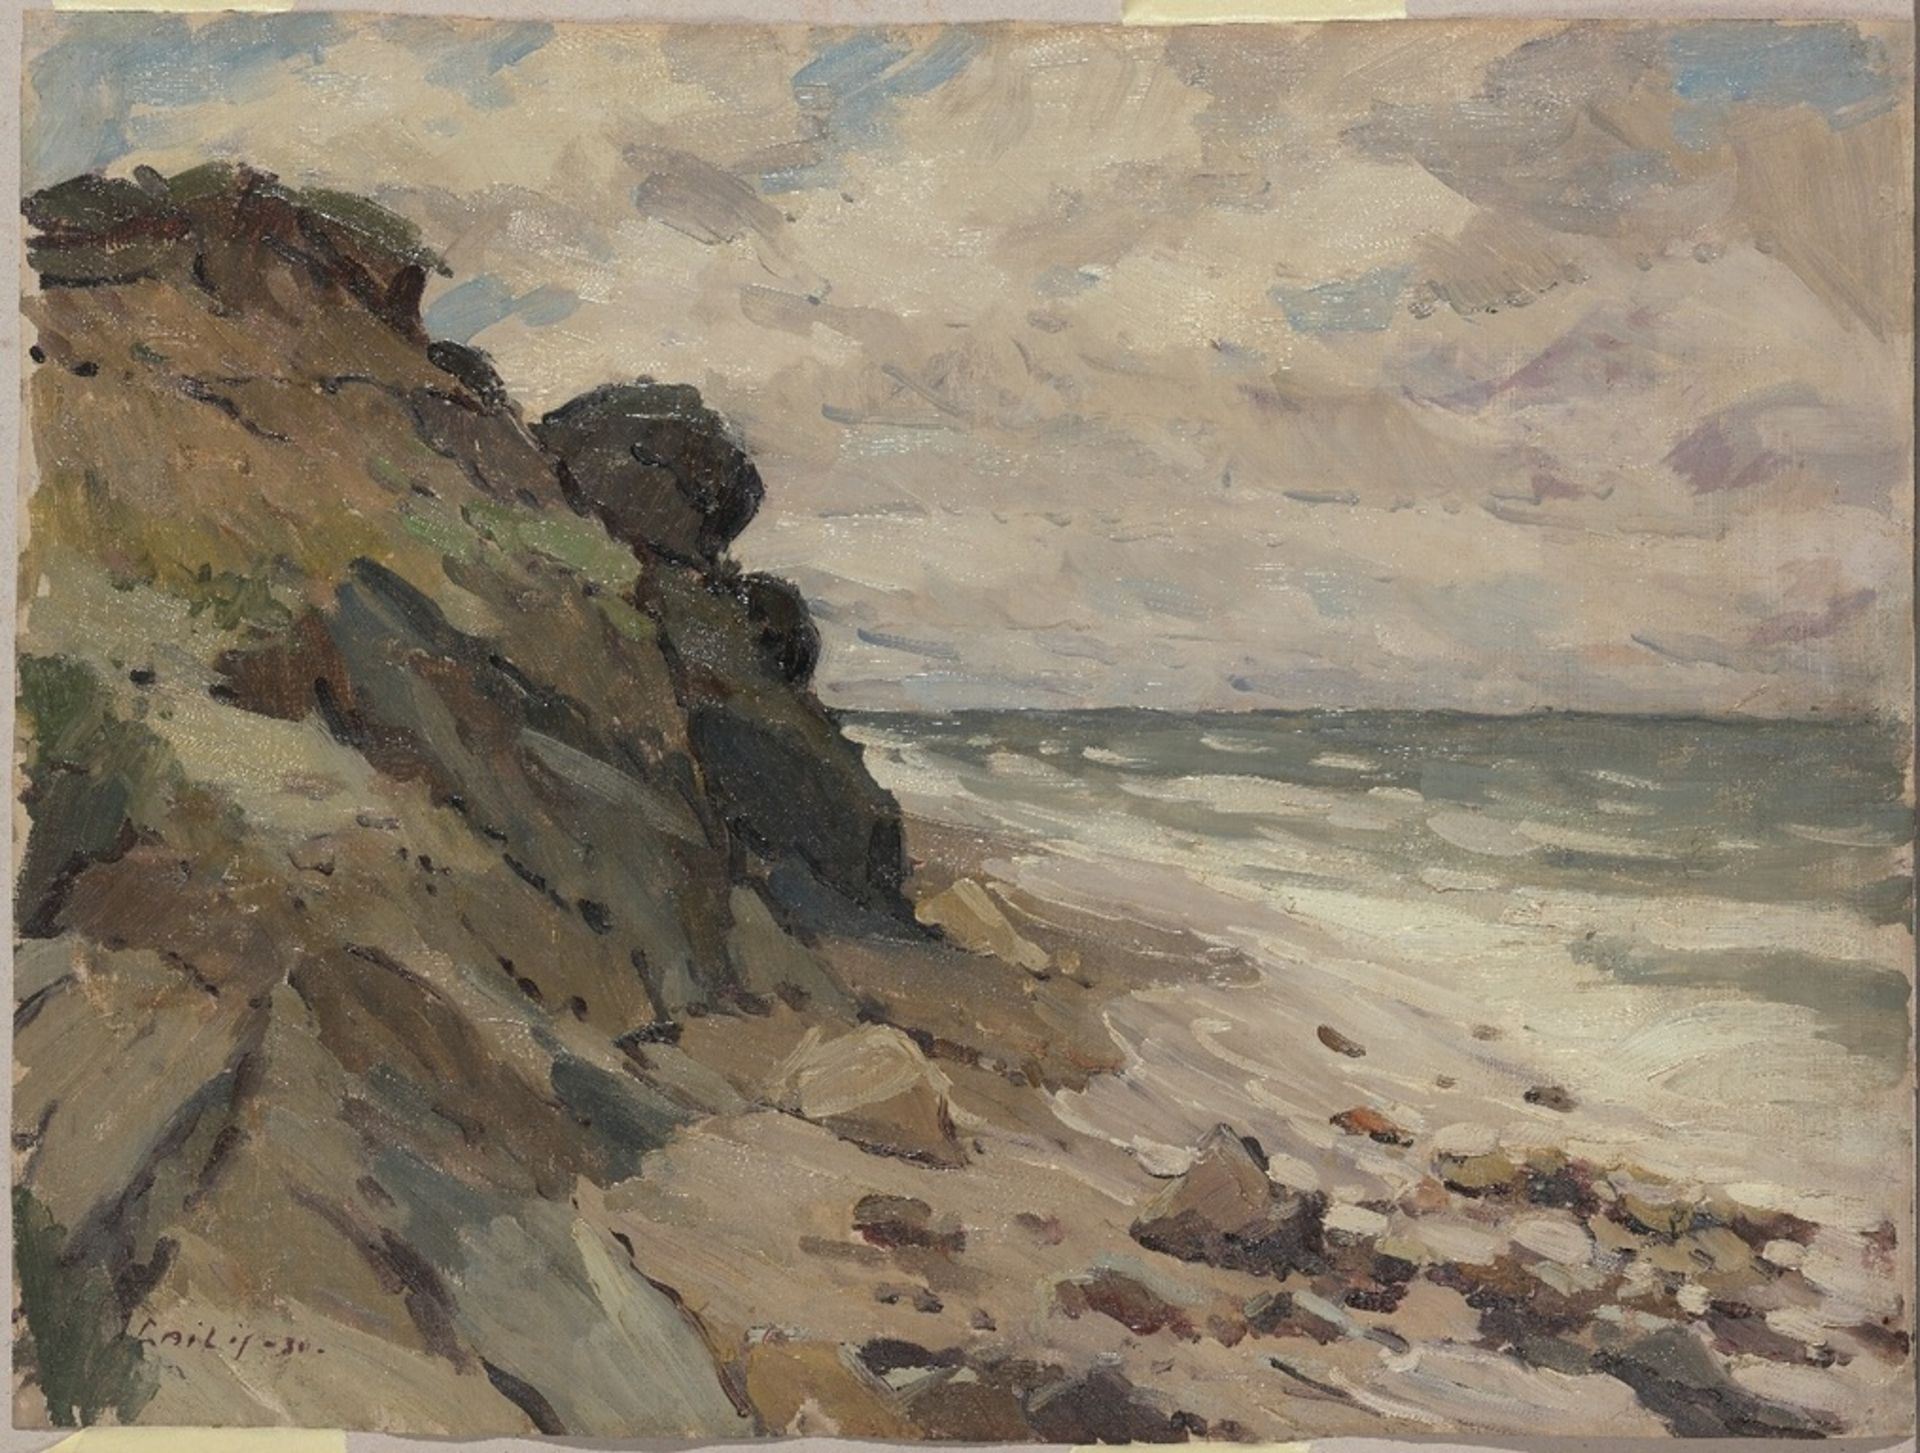 Coastal landscape by Janis Gailis (1903-1975)